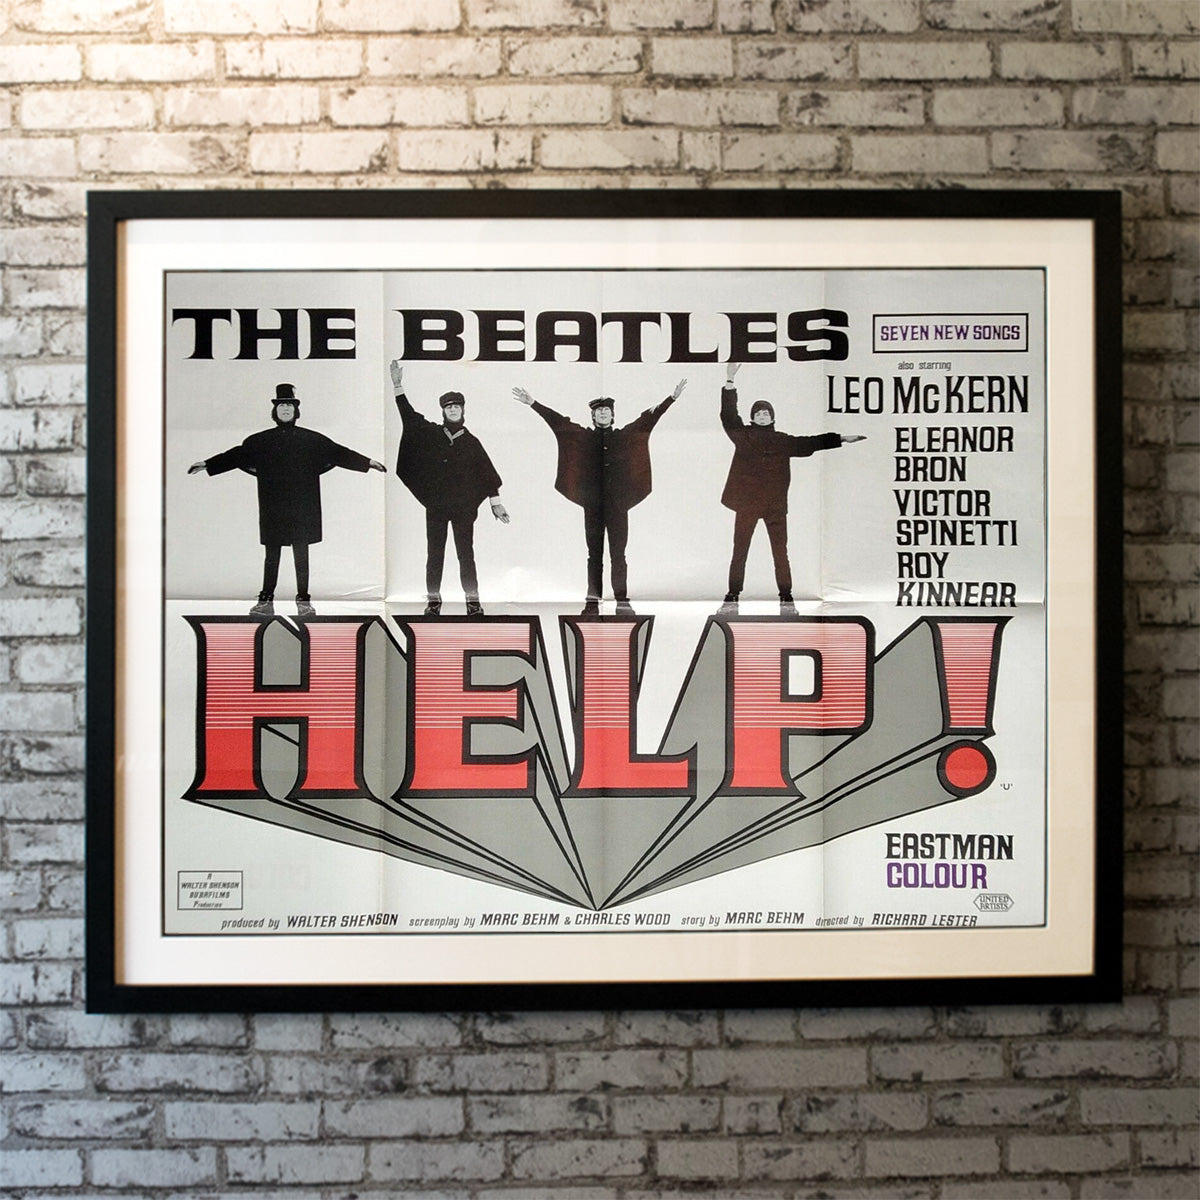 Help! (1965)